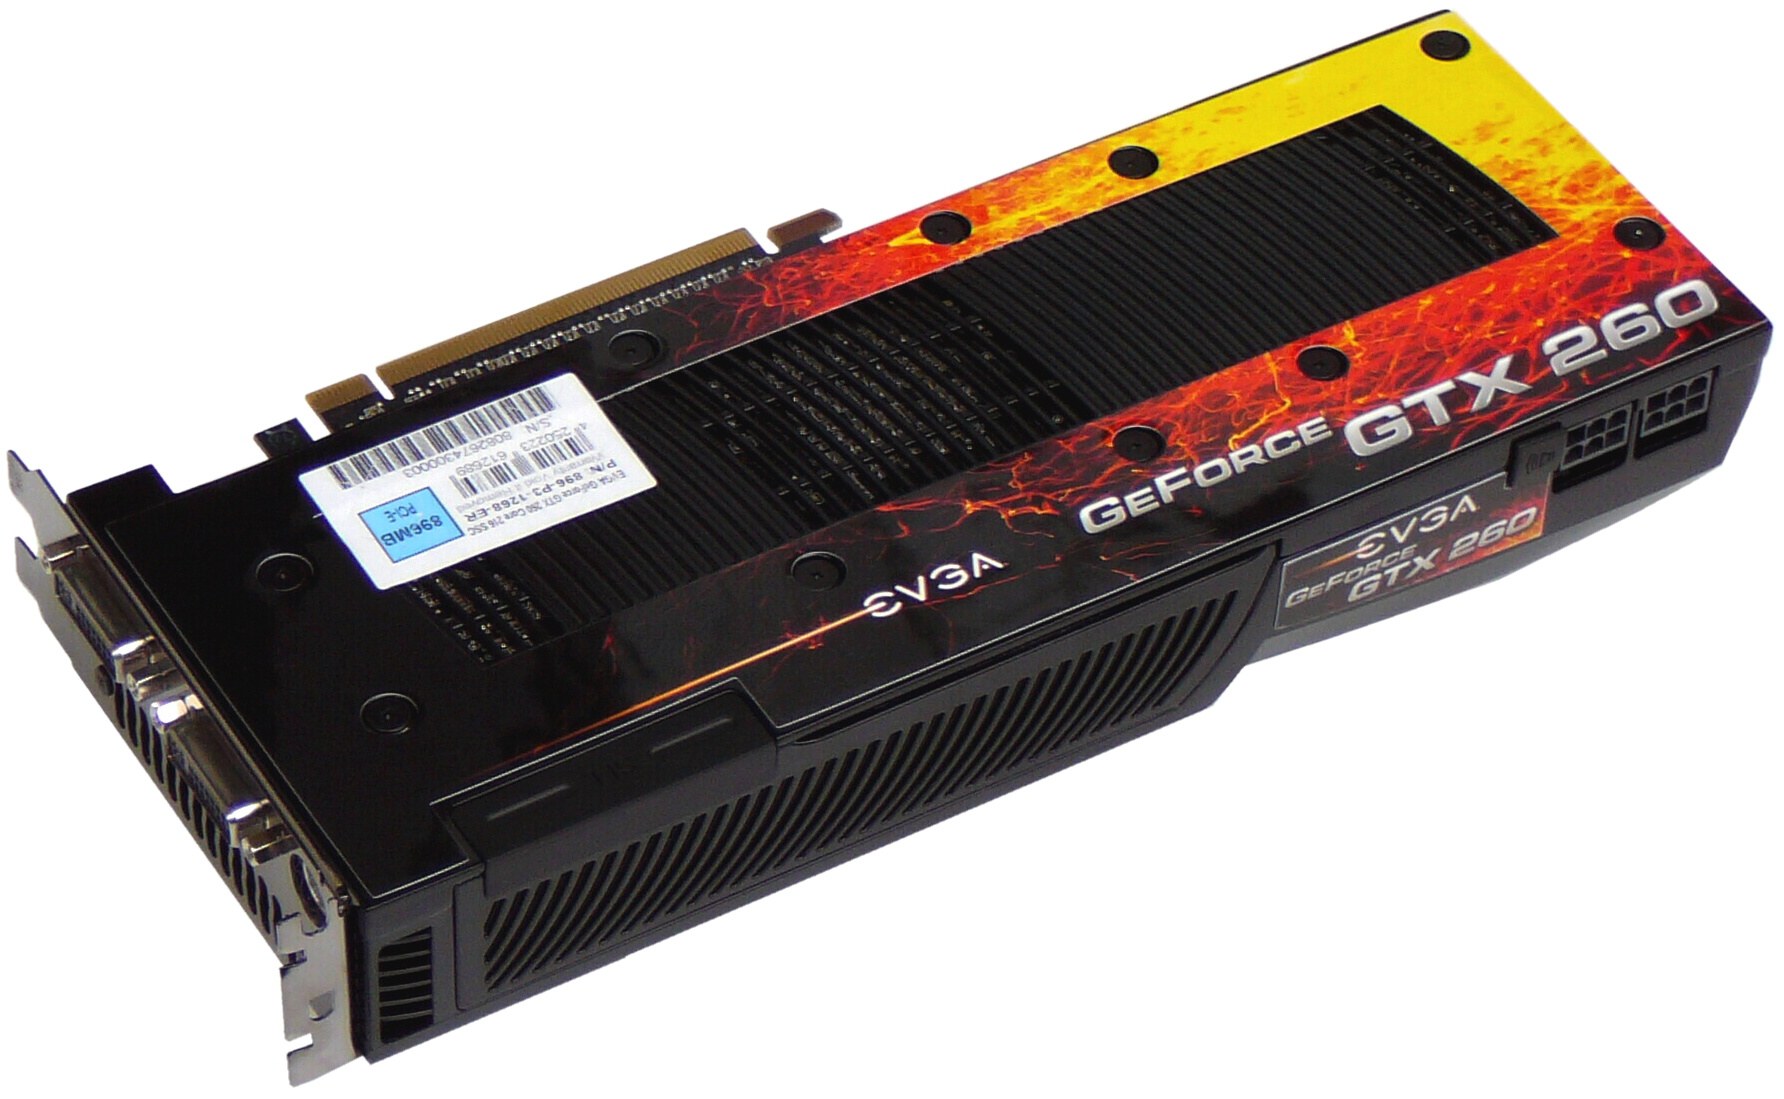 Radeon HD4870 1GB vs. GeForce GTX 260 (216 SP)